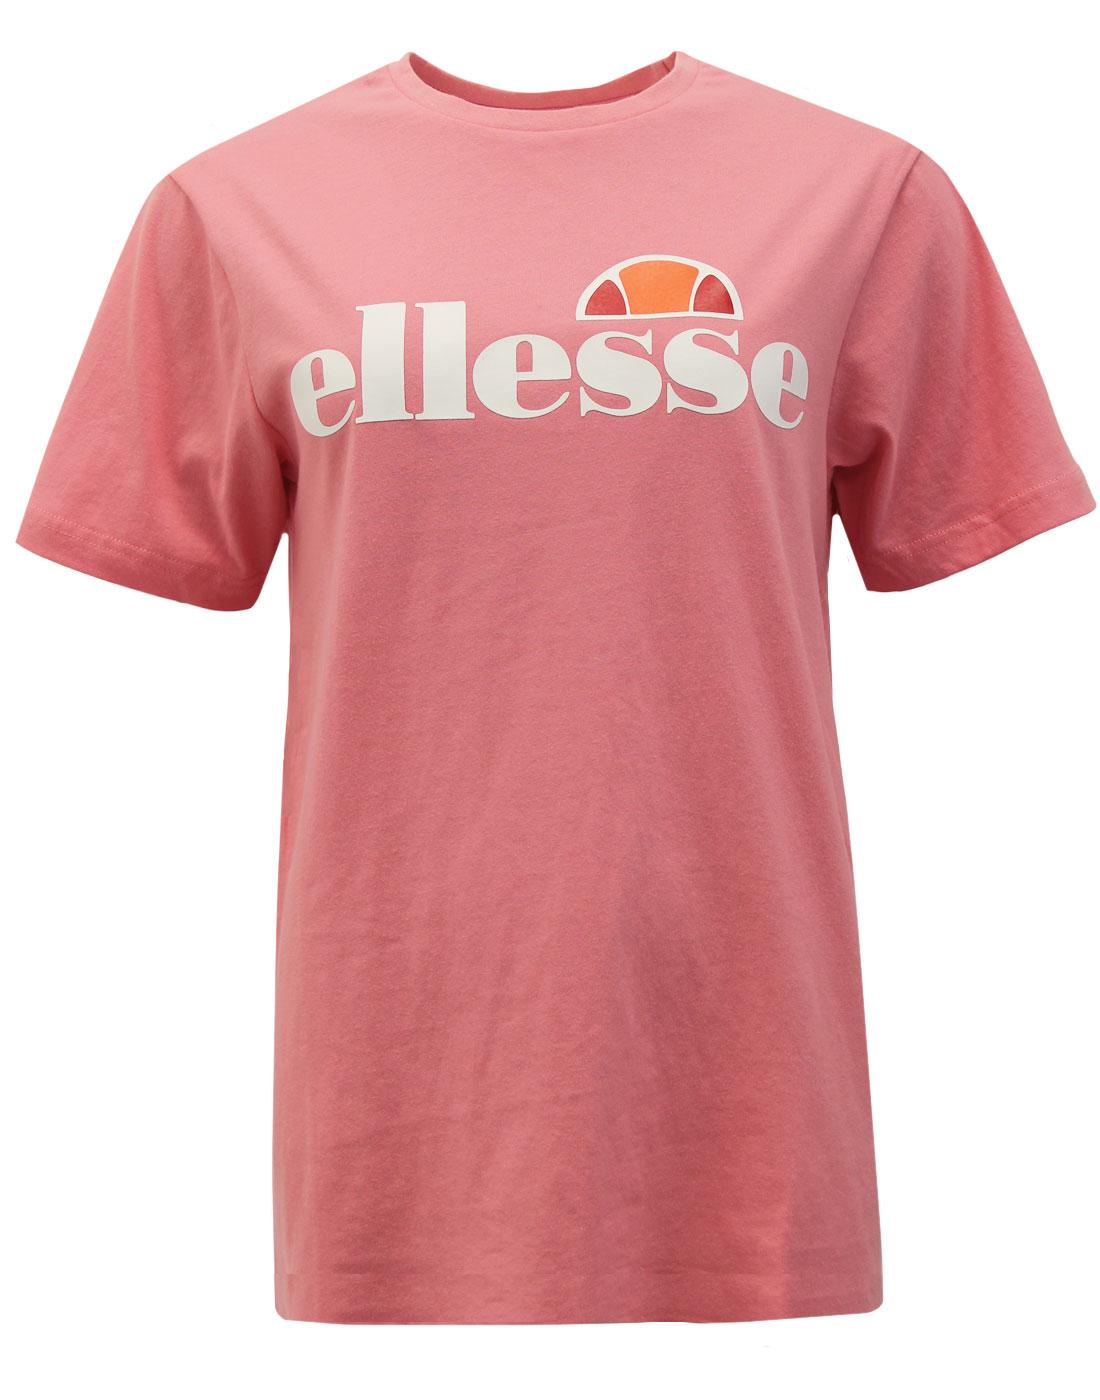 Albany ELLESSE Retro 1980s Boyfriend Fit T-shirt